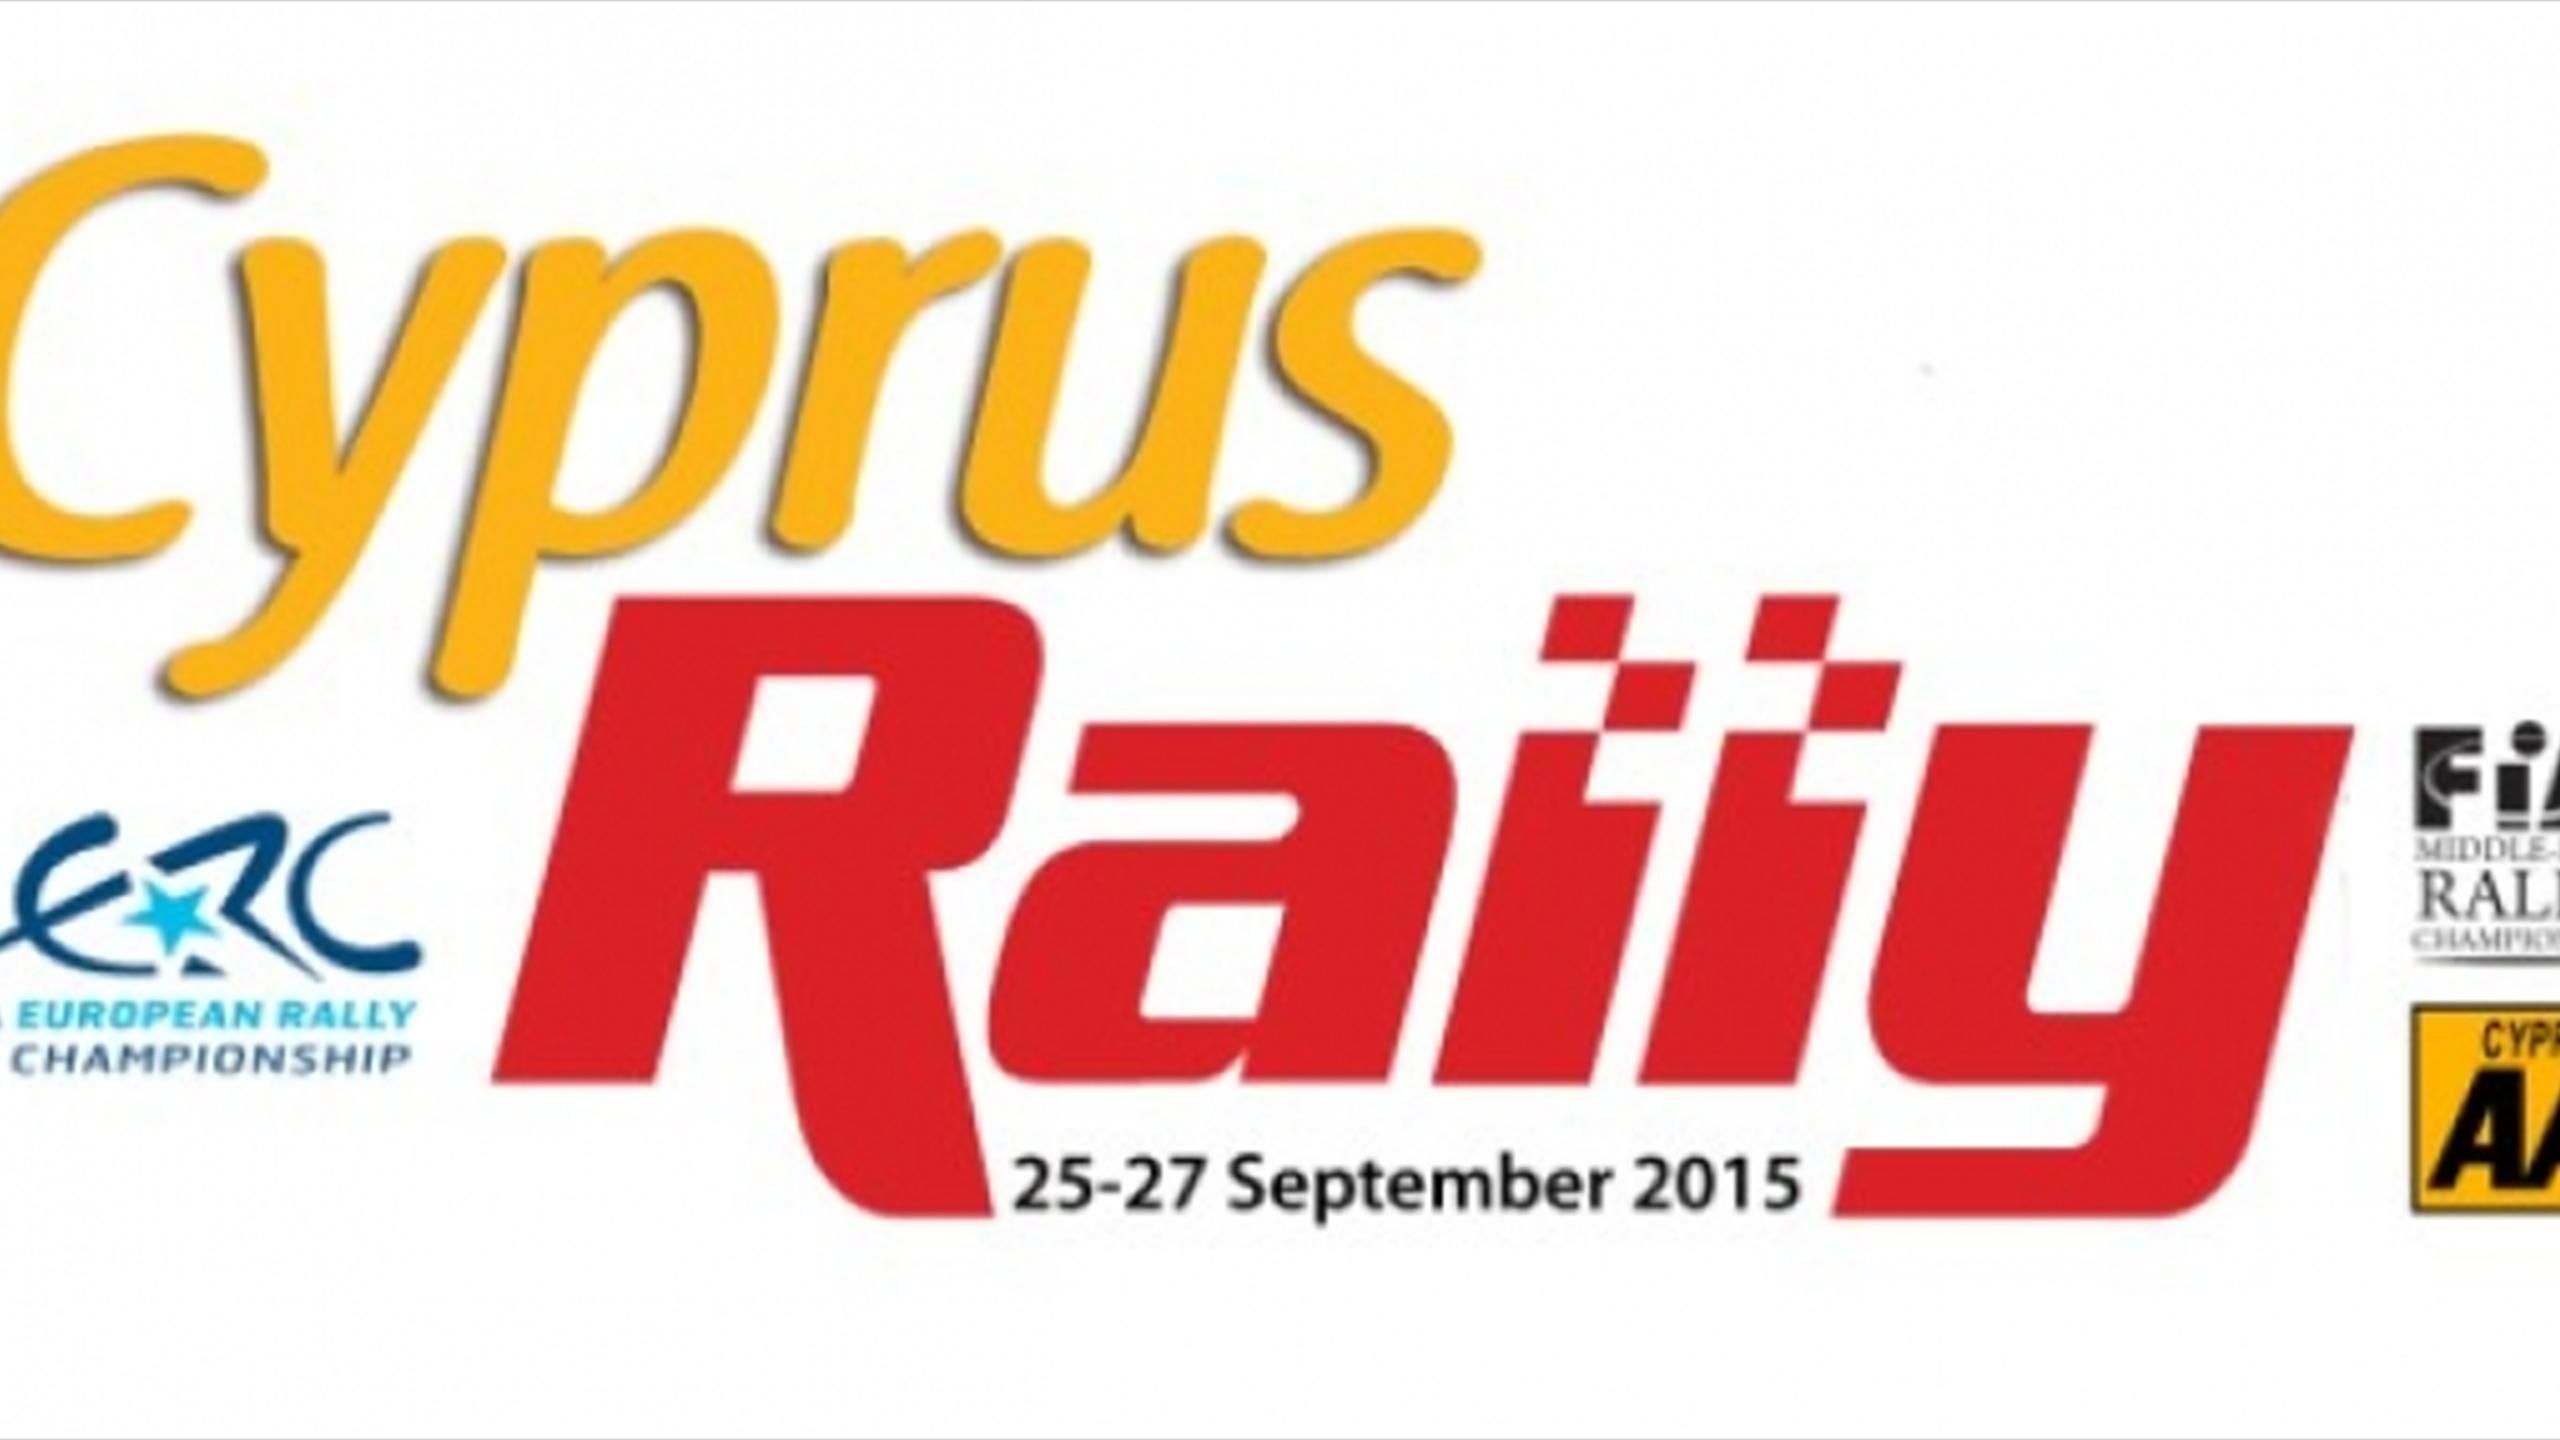 New logo for Erc Cyprus Rally Eurosport